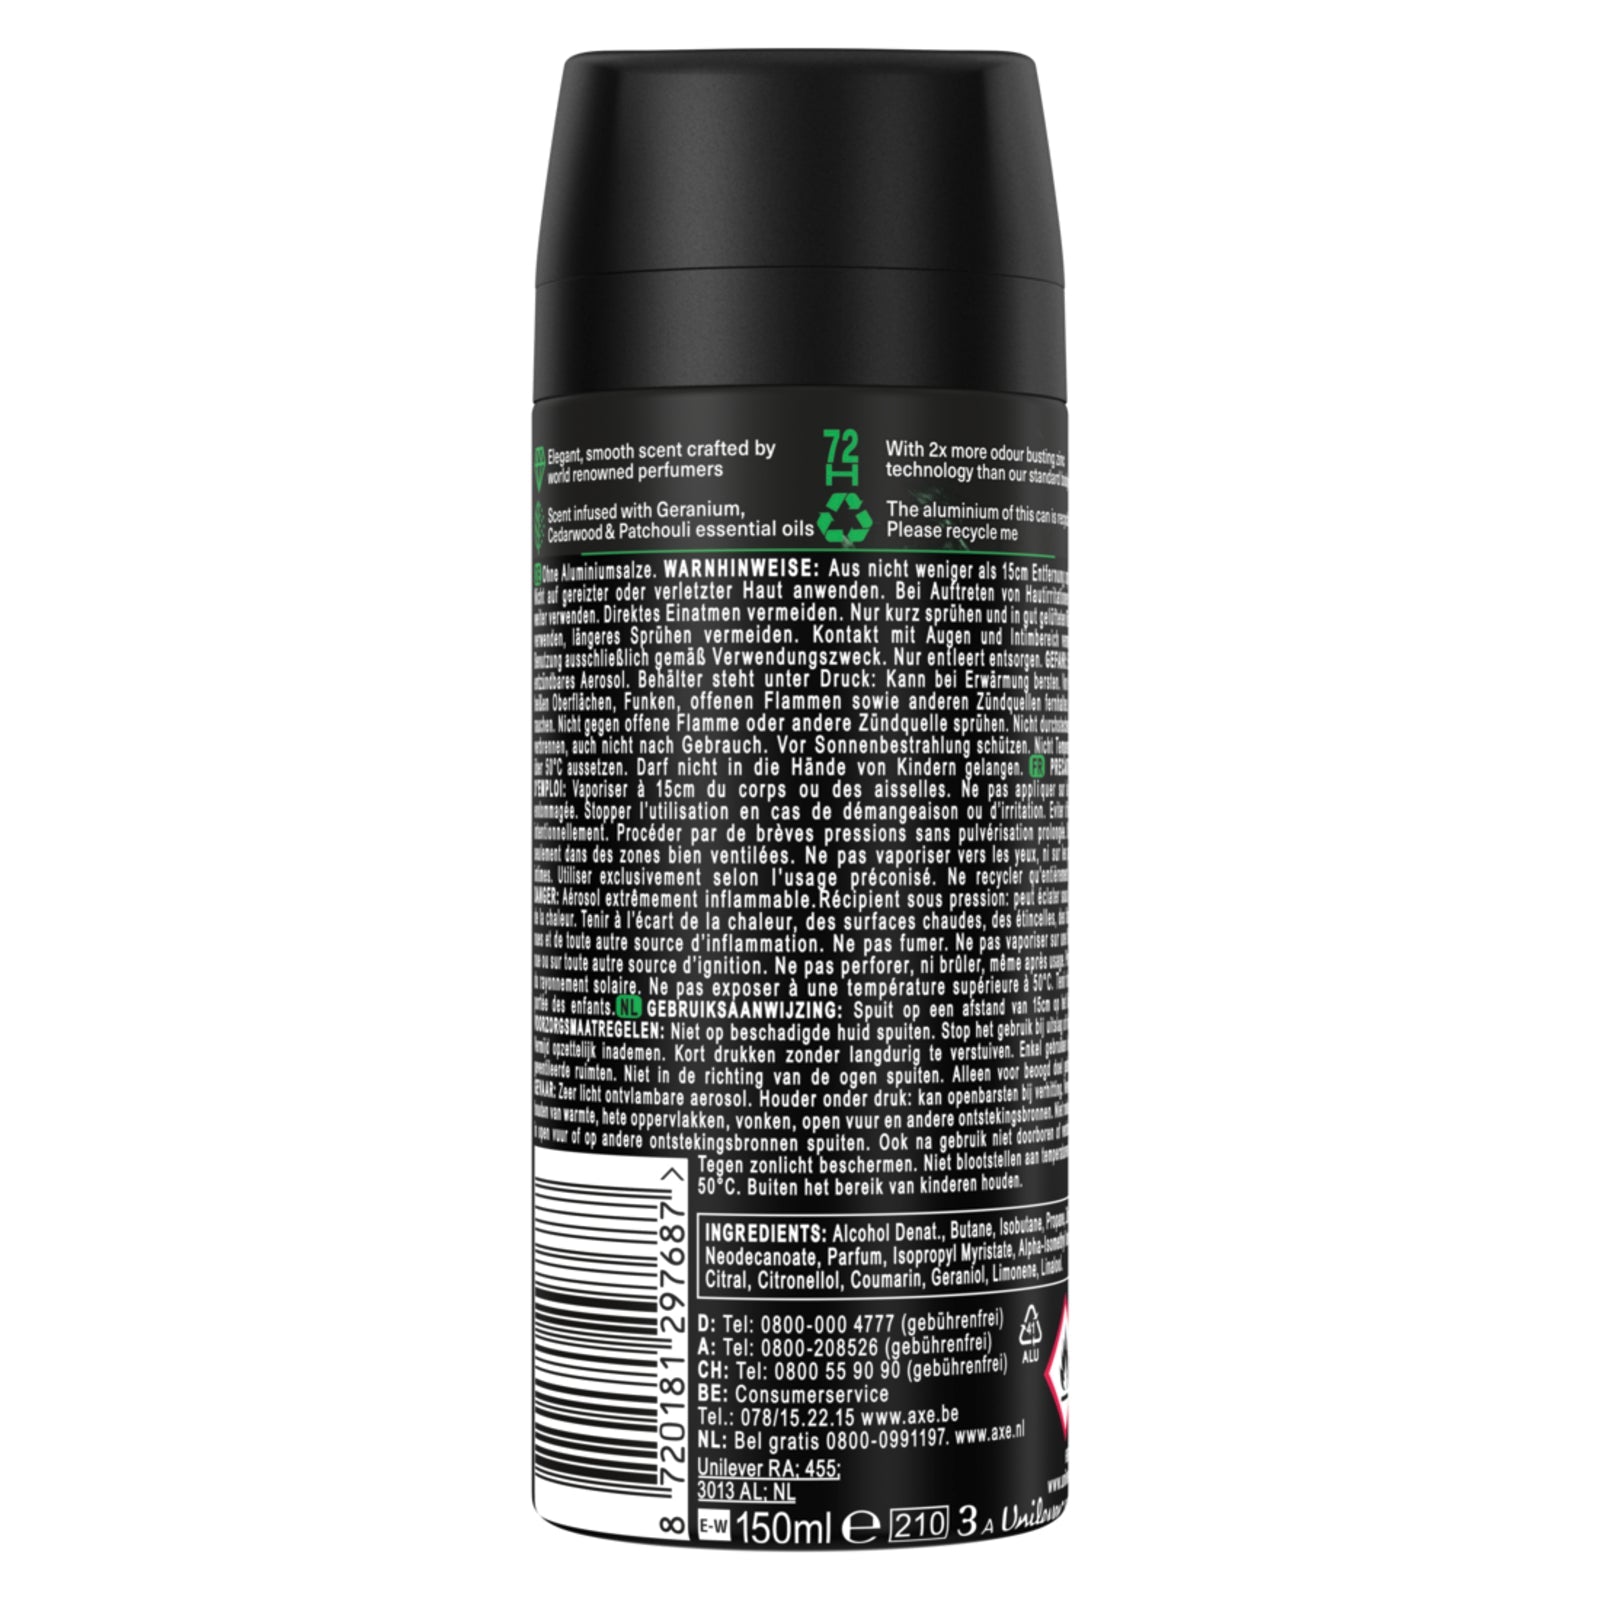 Axe Premium Bodyspray Emerald Geranium Deo ohne Aluminiumsalze mit 72 Stunden 150 ml